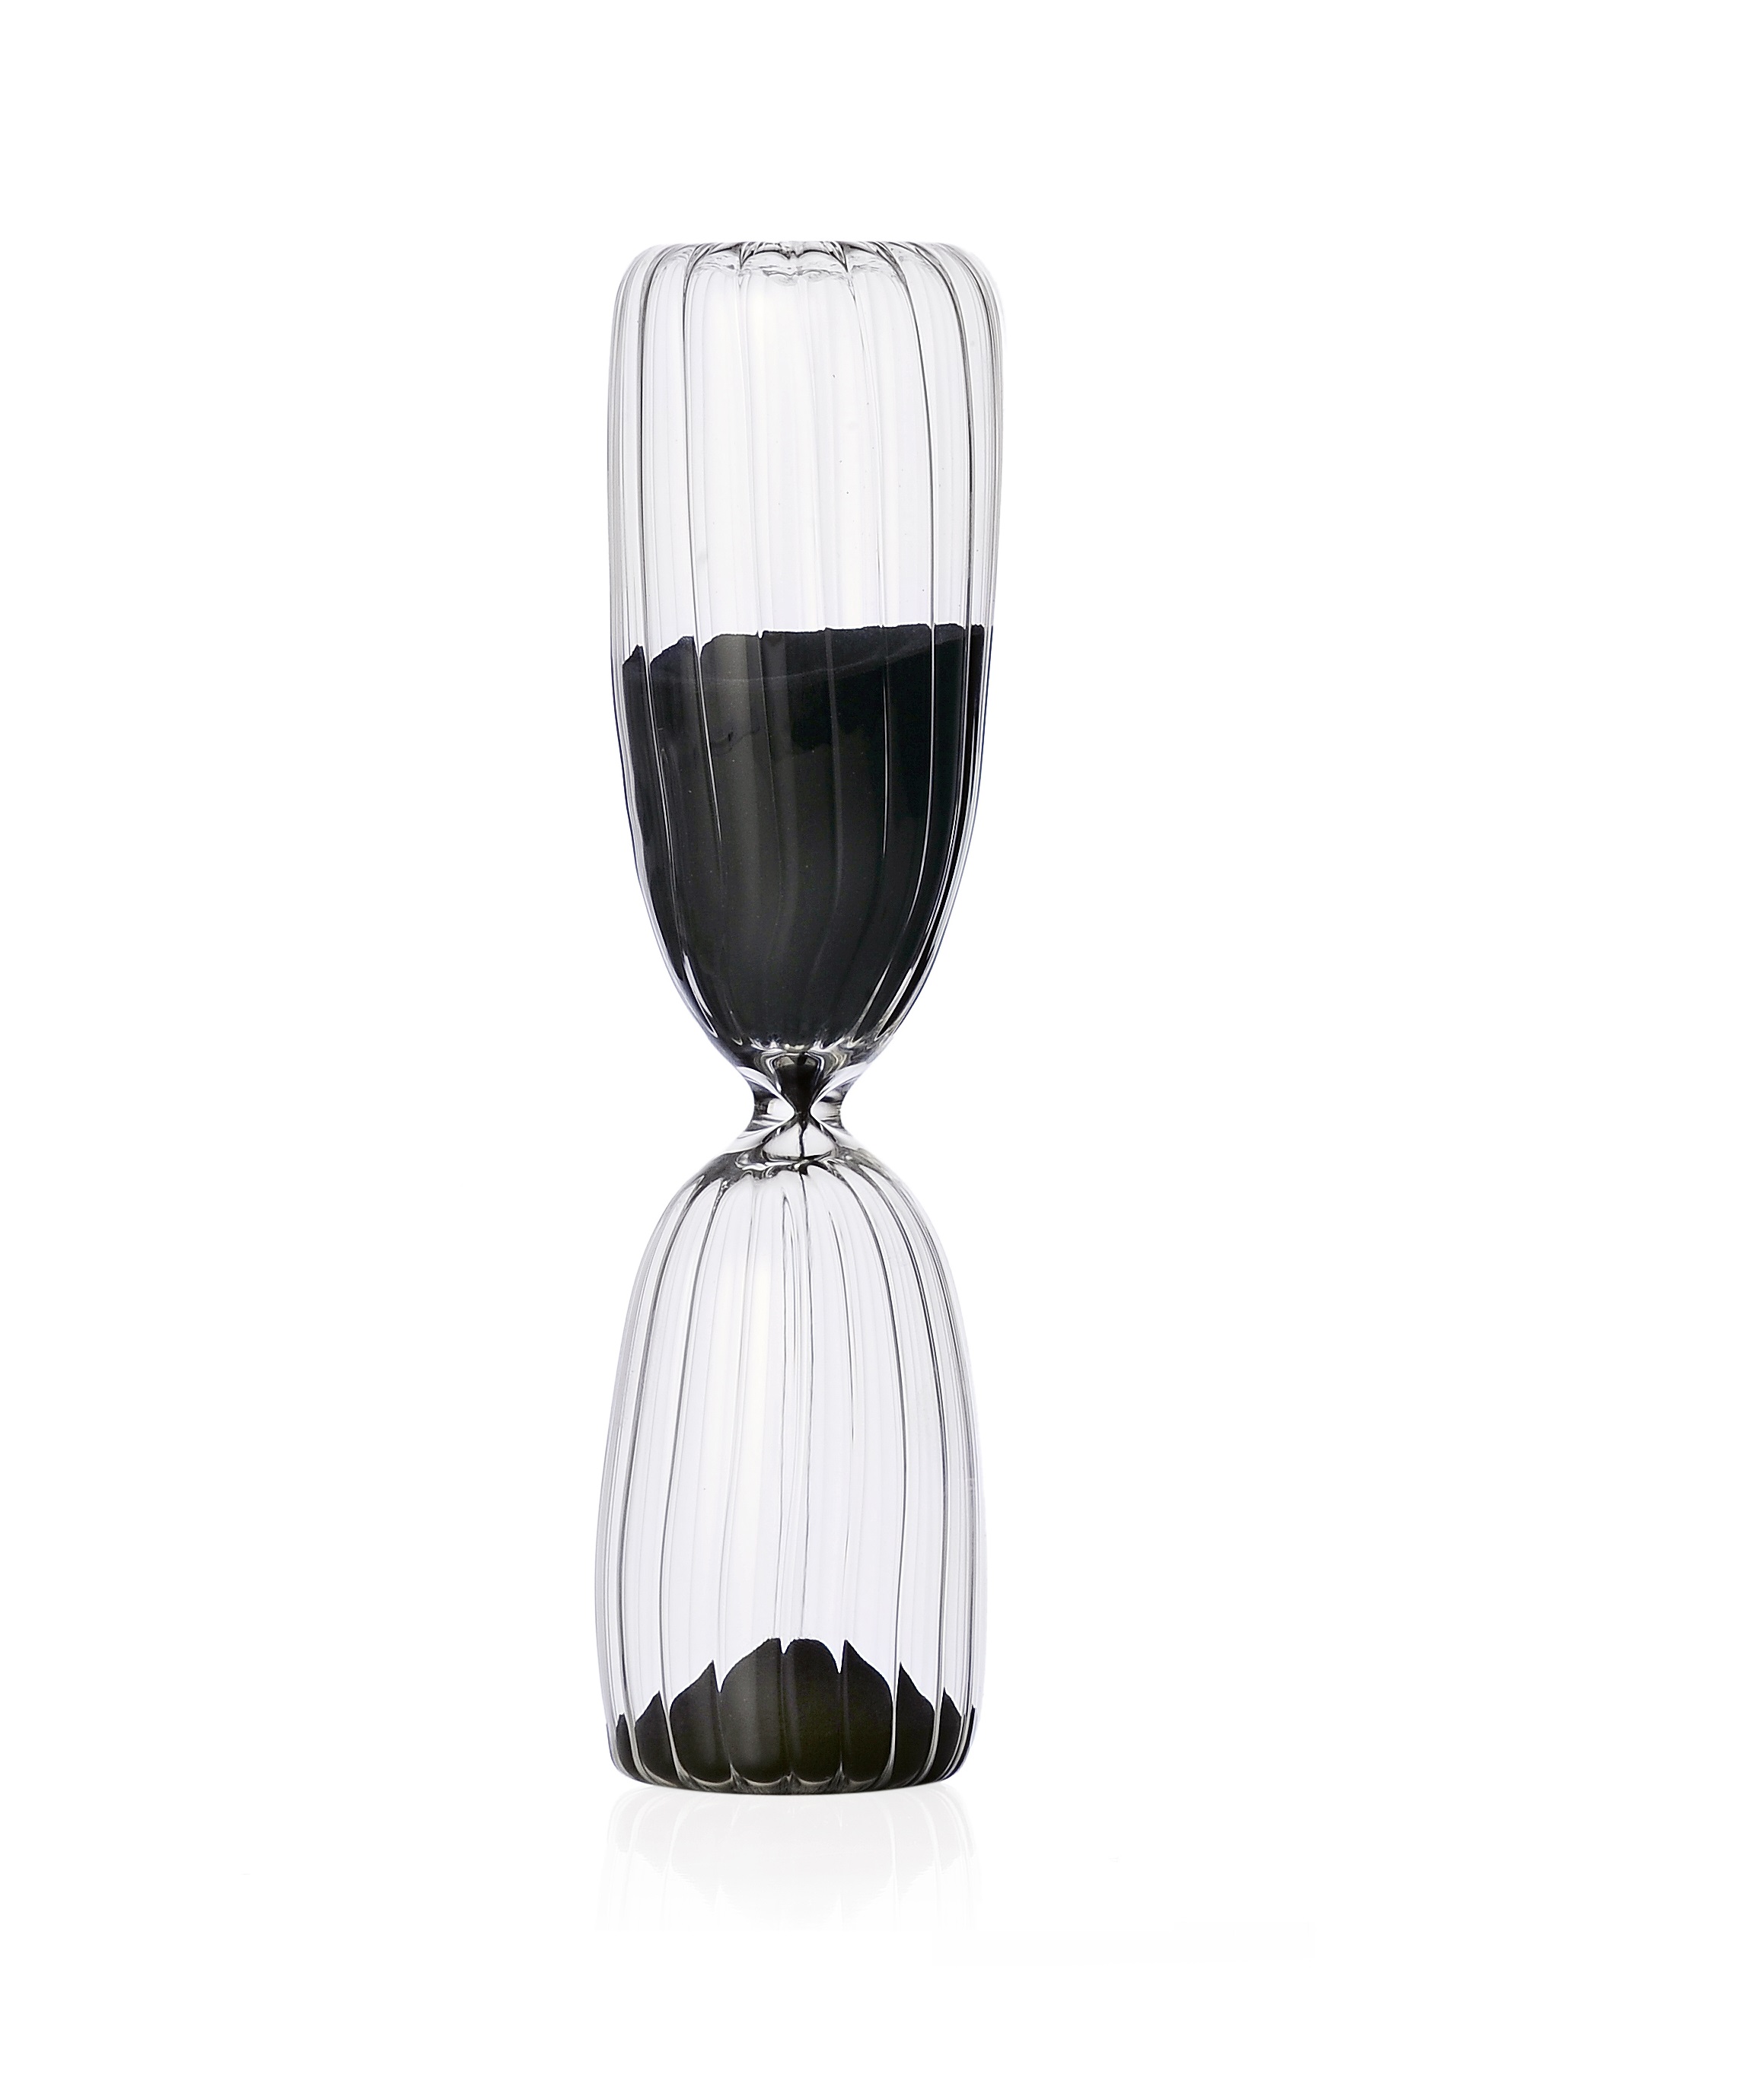 Hourglass Ichendorf Times 15 minutes